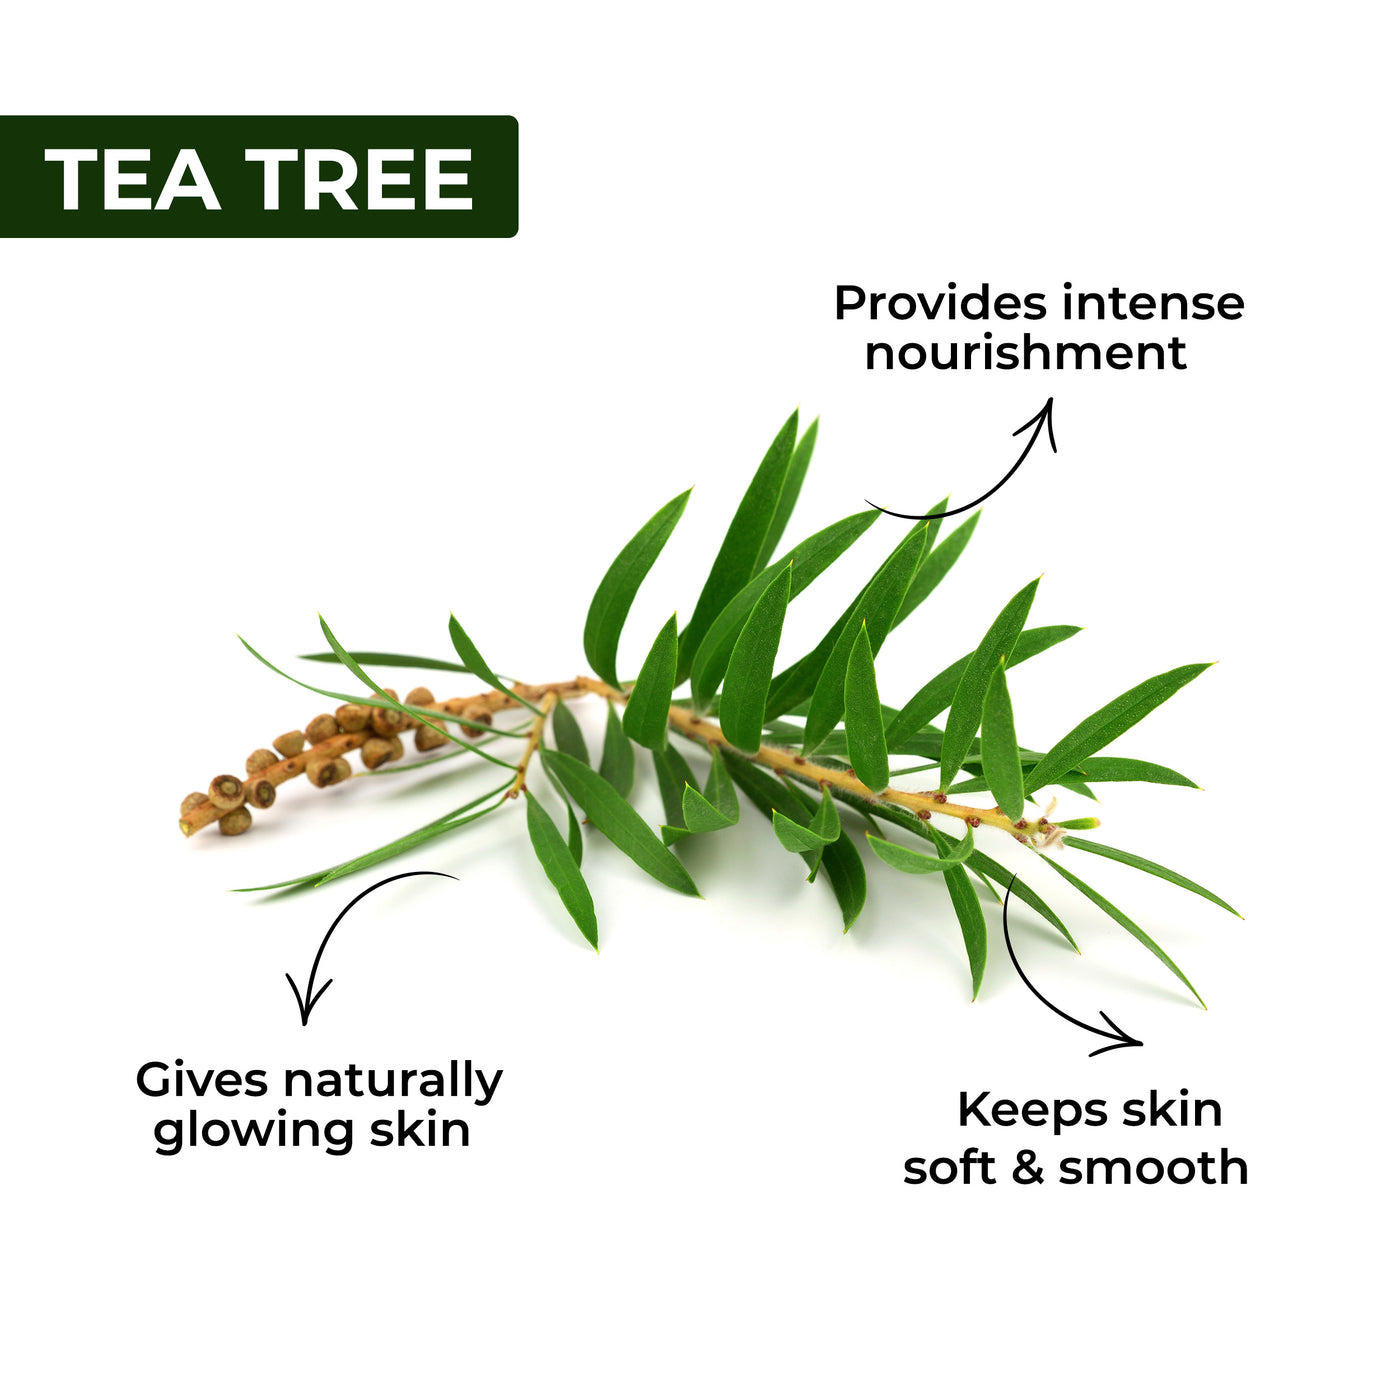 Acne Control Tea Tree Toner 150ml